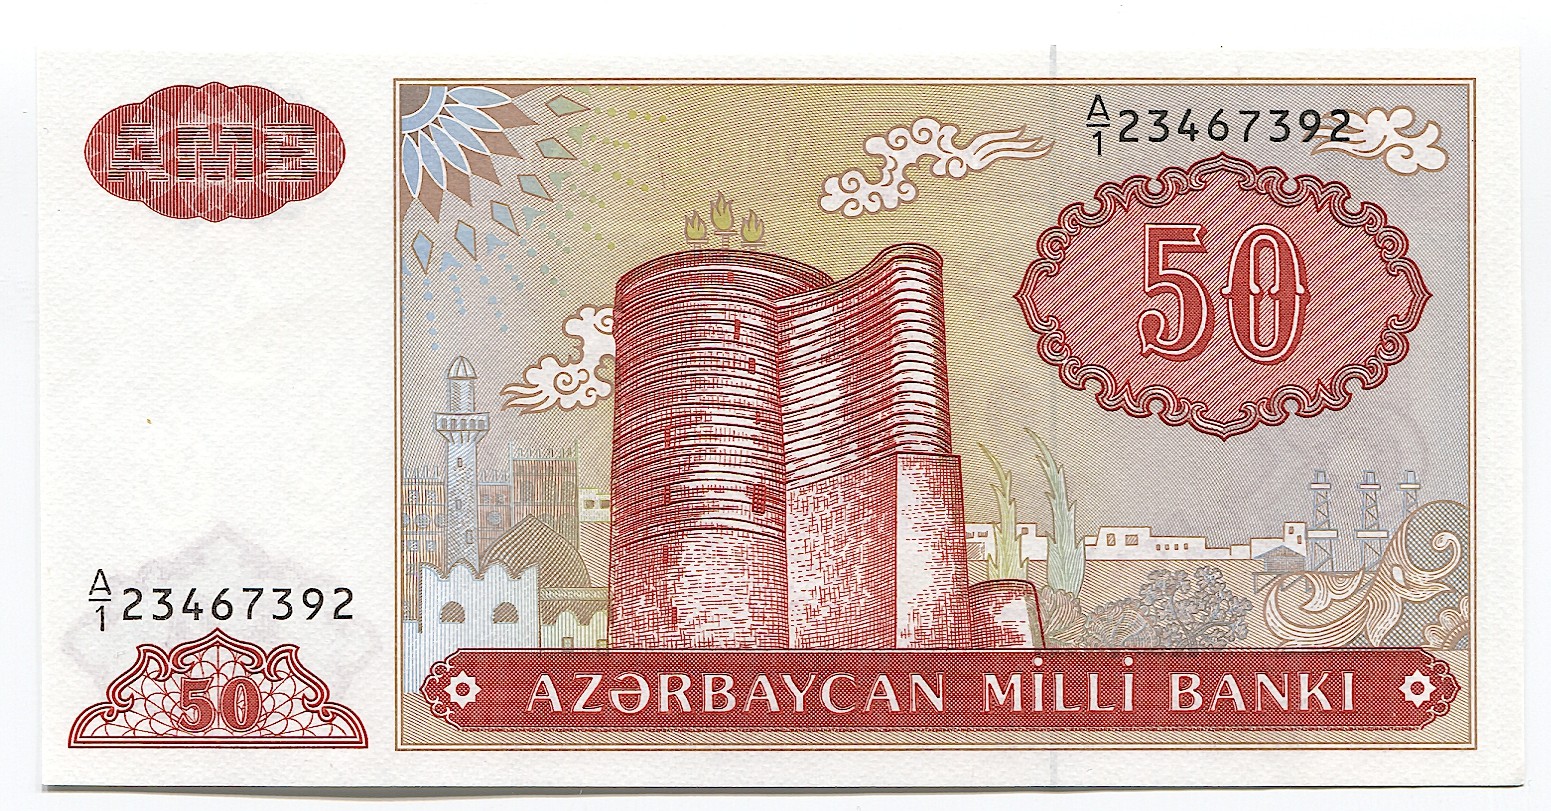 100 Манат. 50 Манат купюра. 10000 Манатов 1994 года Азербайджан. Азербайджанский манат все банкноты и монеты. 3 маната в рублях